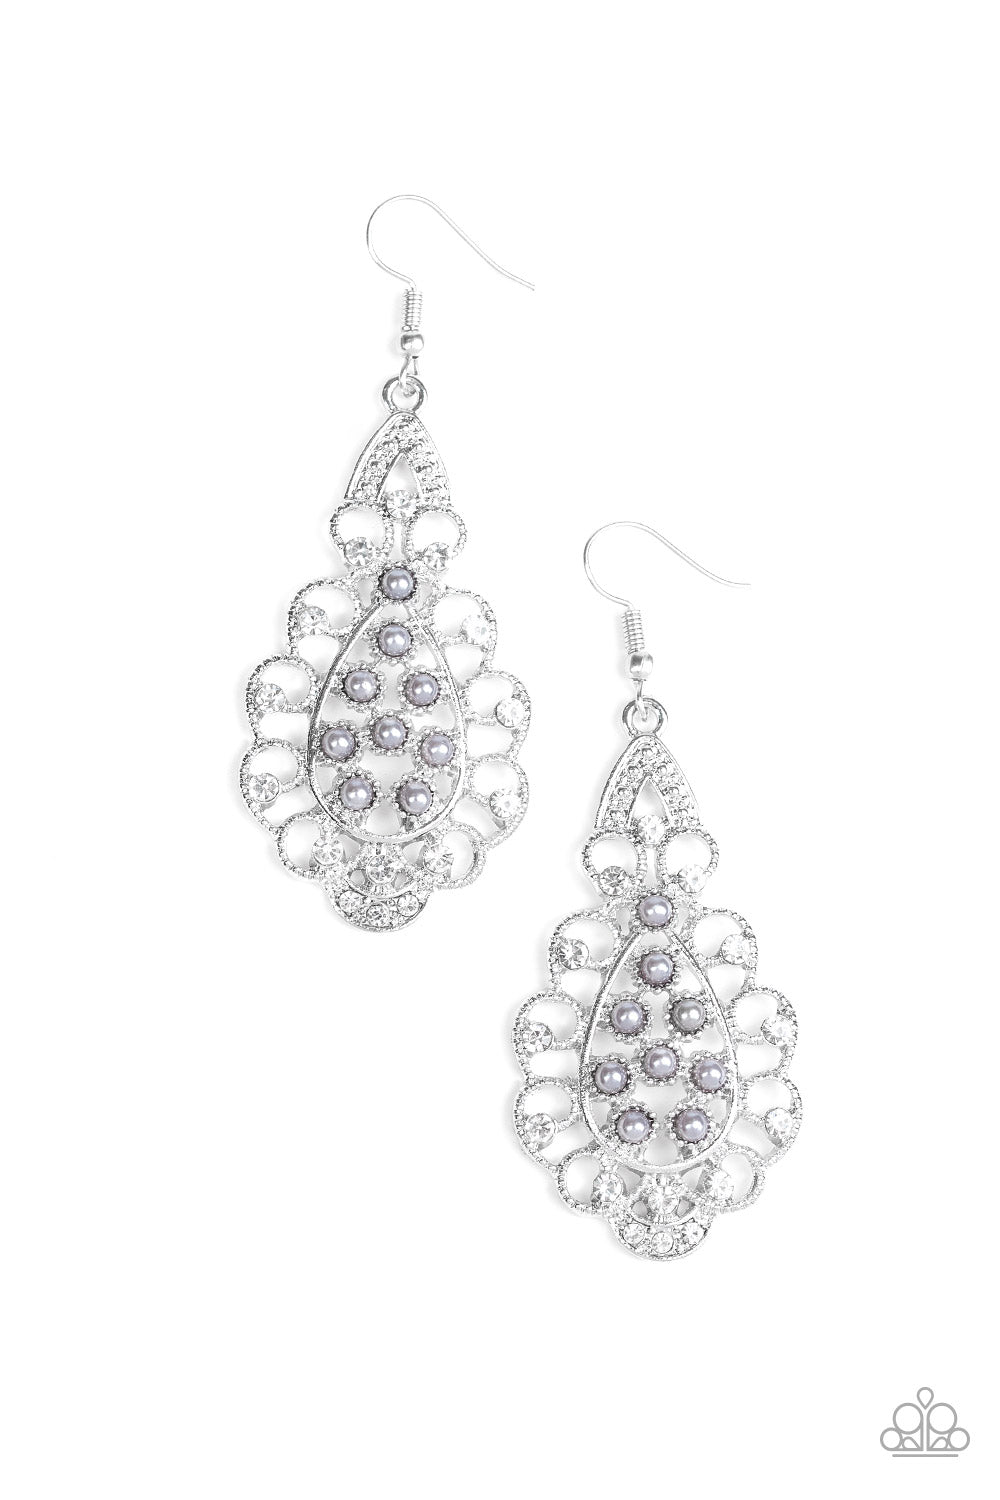 Sprinkle On The Sparkle - Silver (Gray Pearl and White Rhinestone) Earring freeshipping - JewLz4u Gemstone Gallery